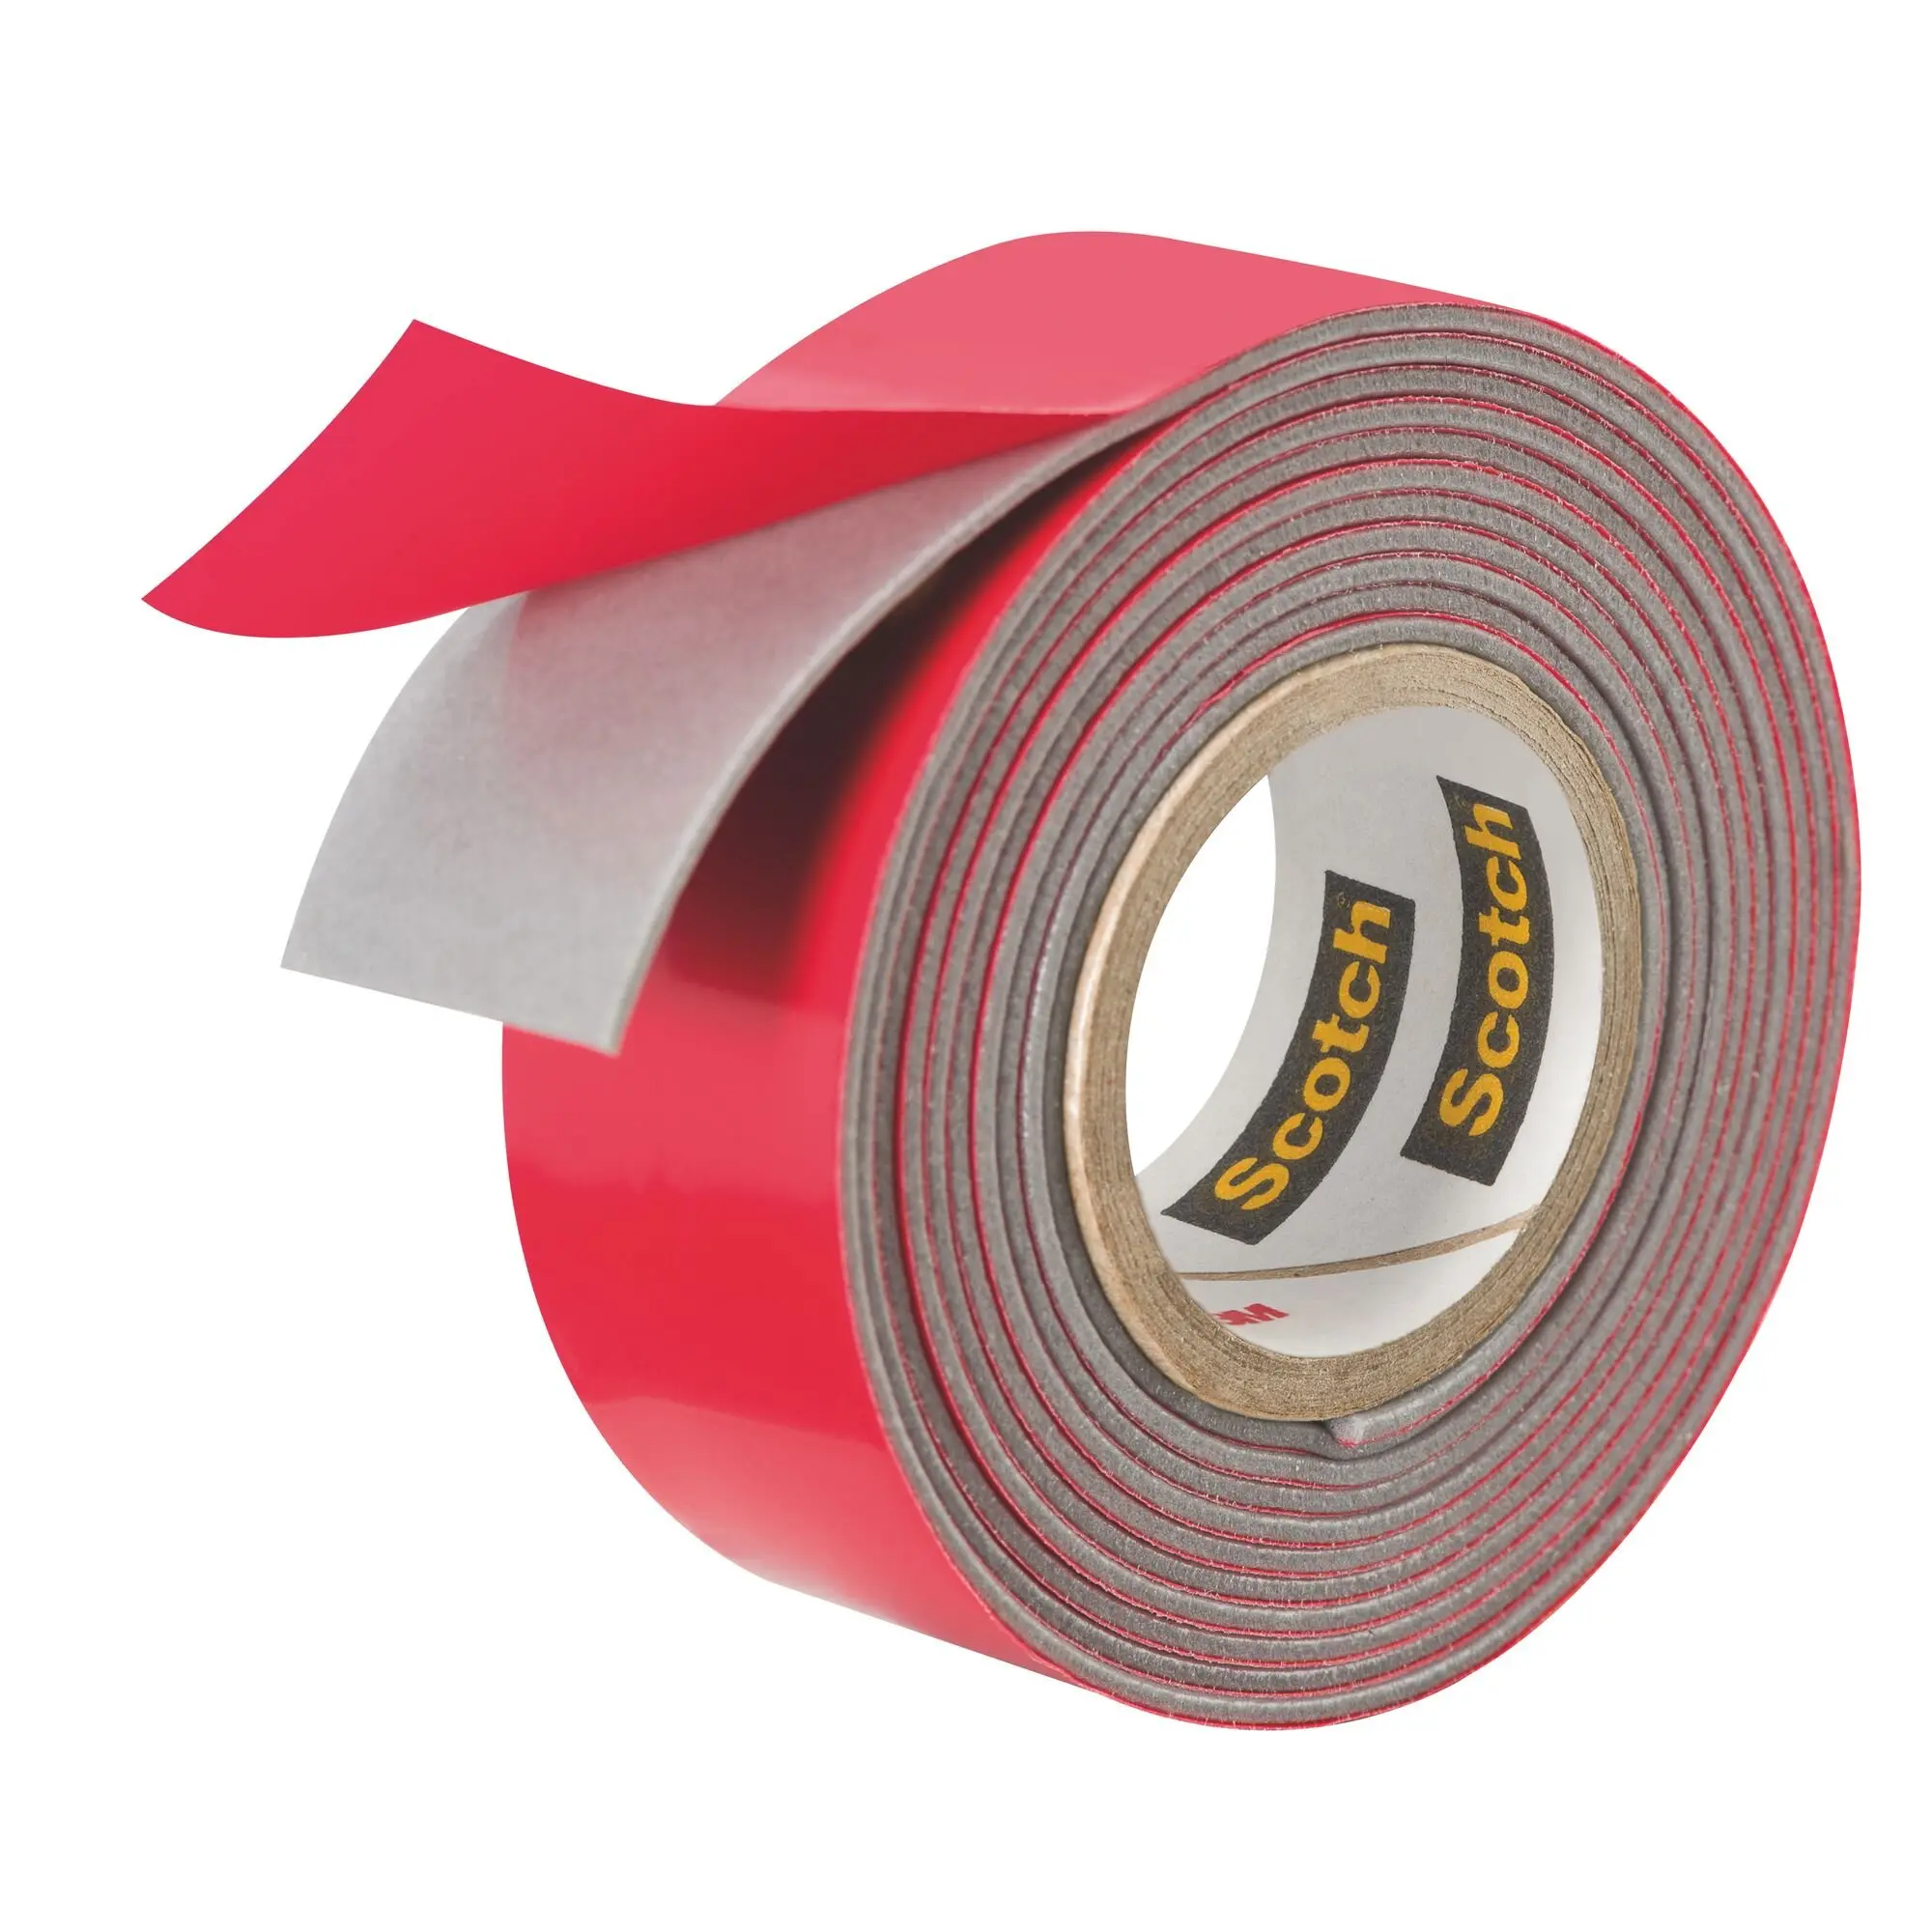 cinta doble cara para policarbonato - Cuánto soporta la cinta doble cara